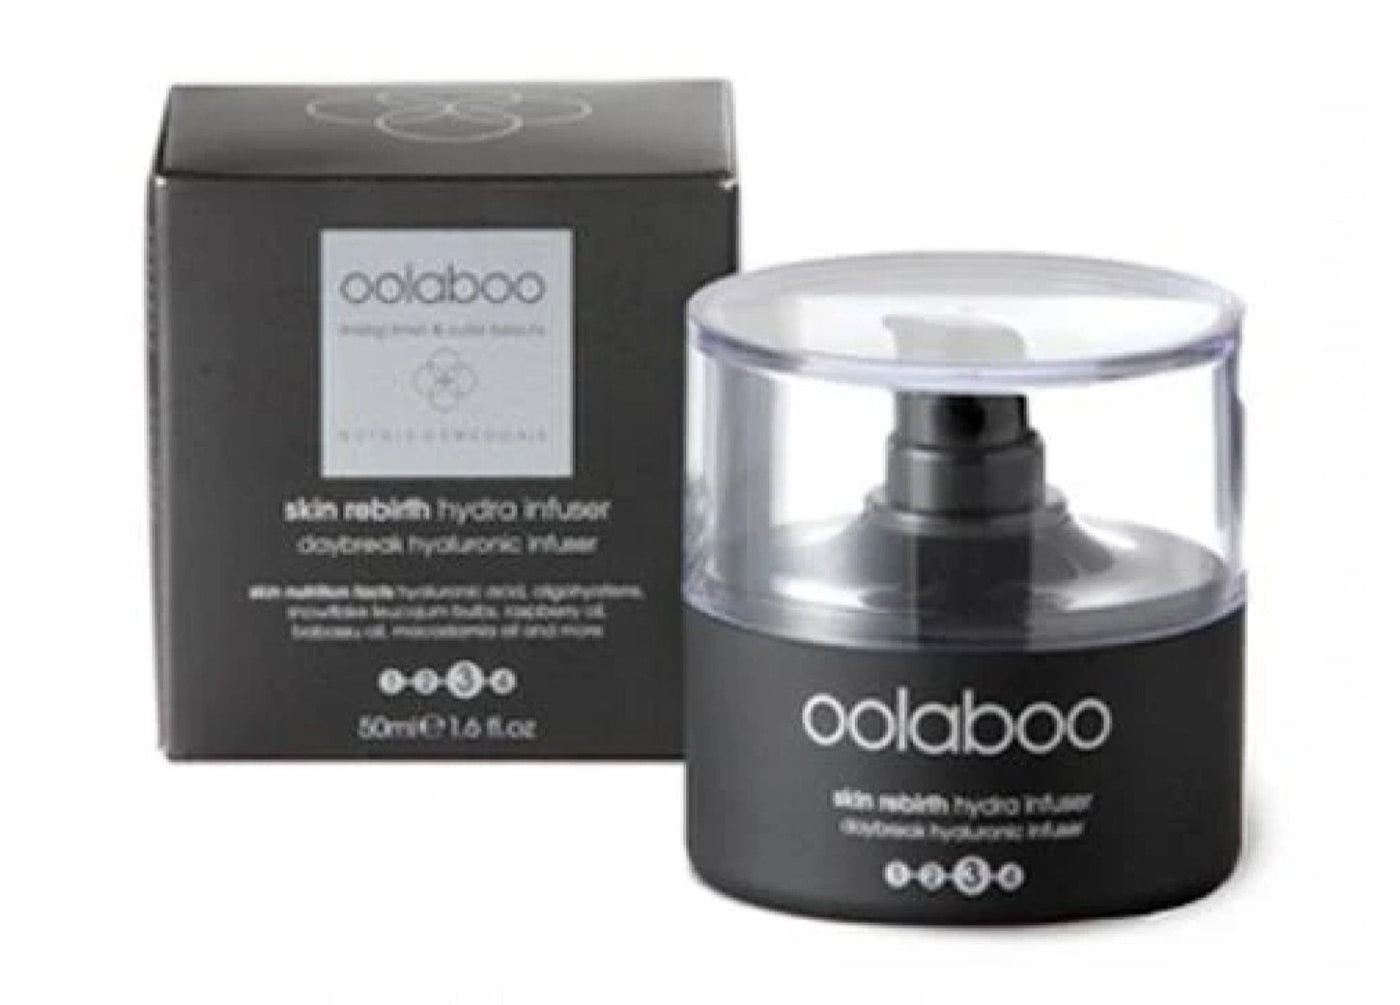 Oolaboo Skin Rebirth Hydra Infuser 50 ml - Salon Warehouse